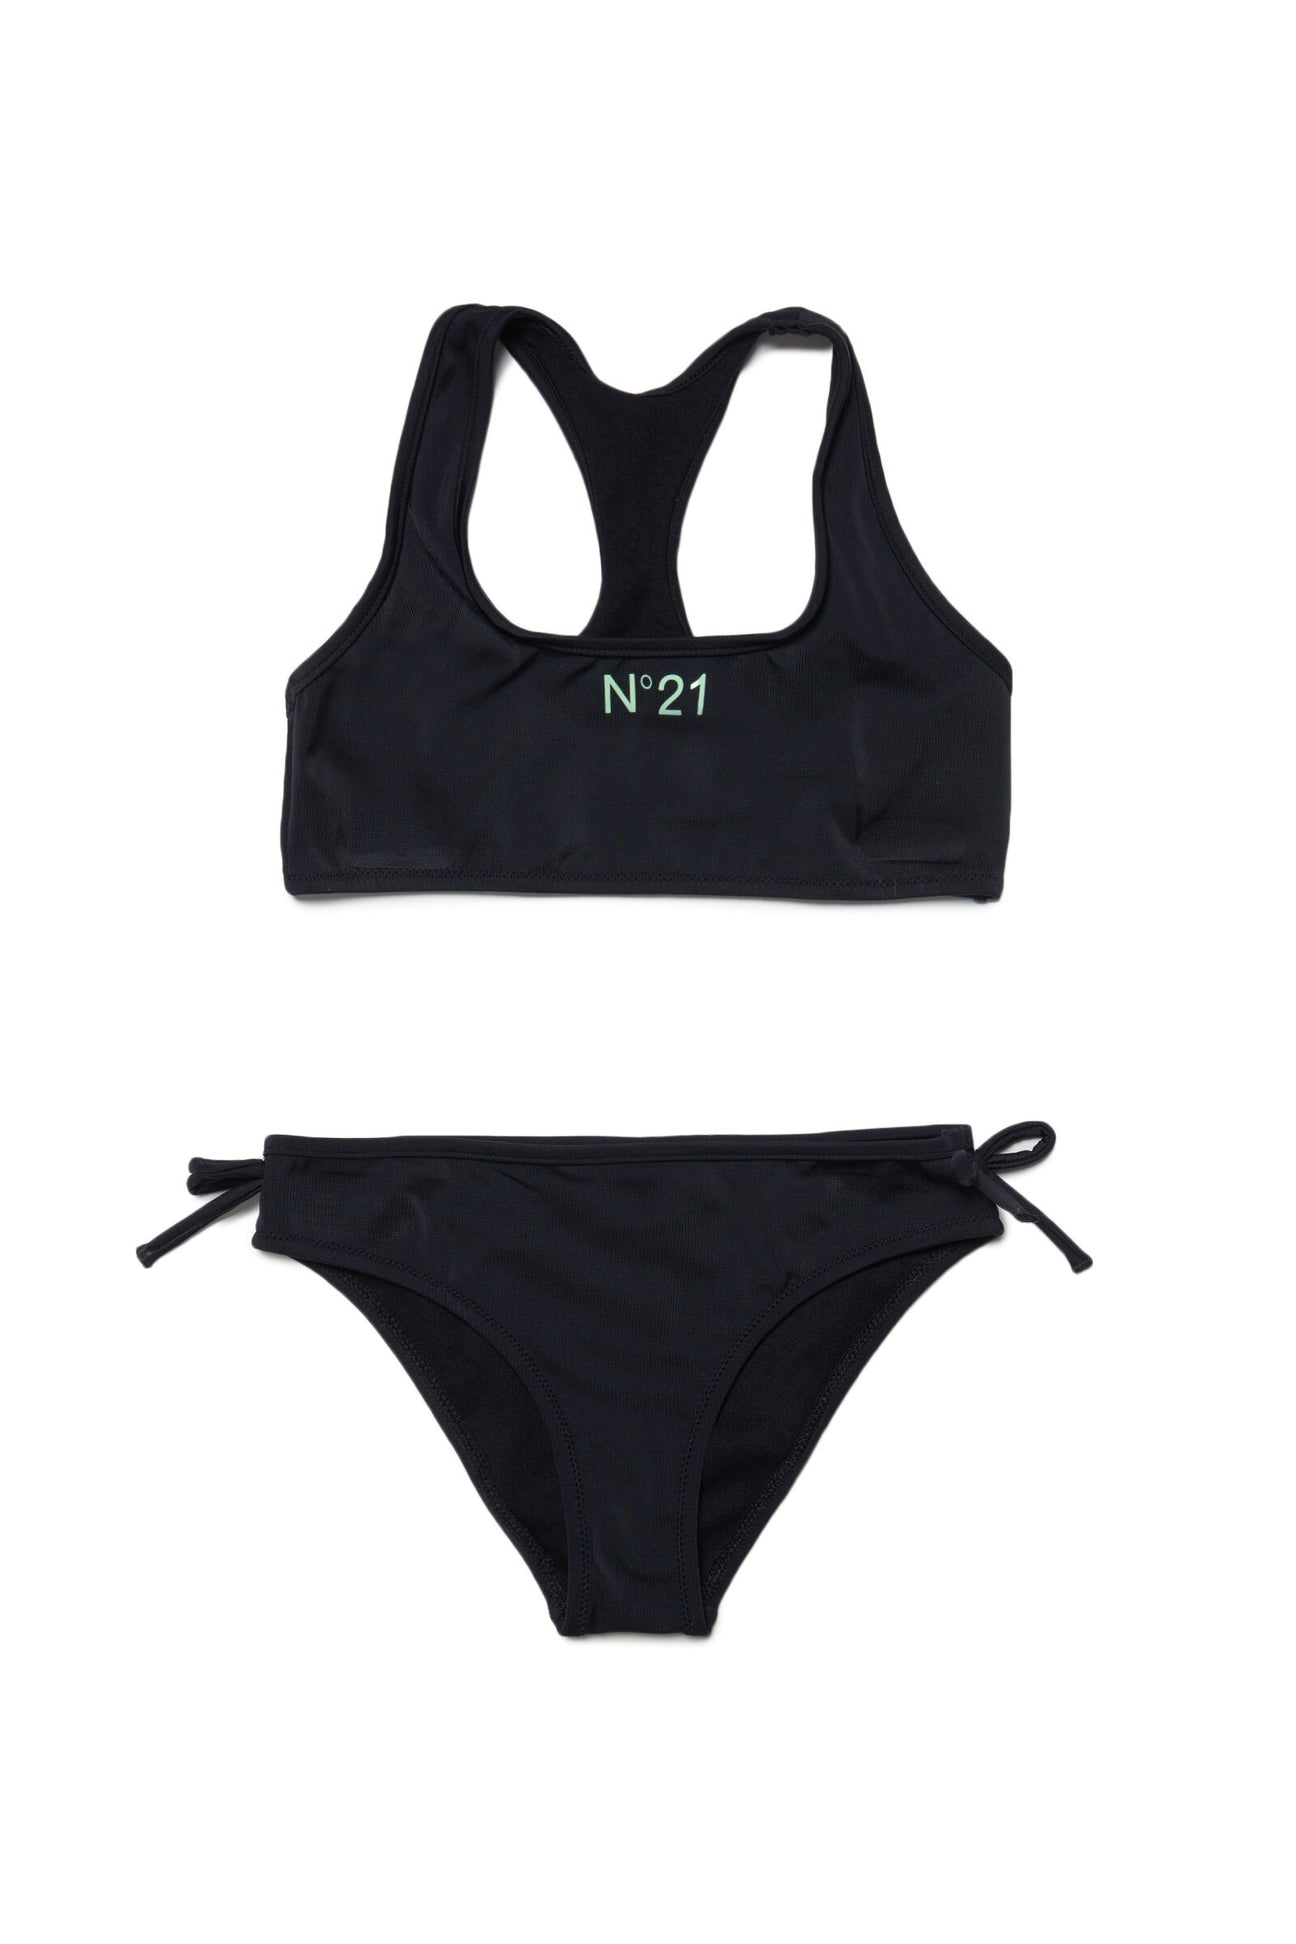 Black lycra bikini swimming costume with logo 